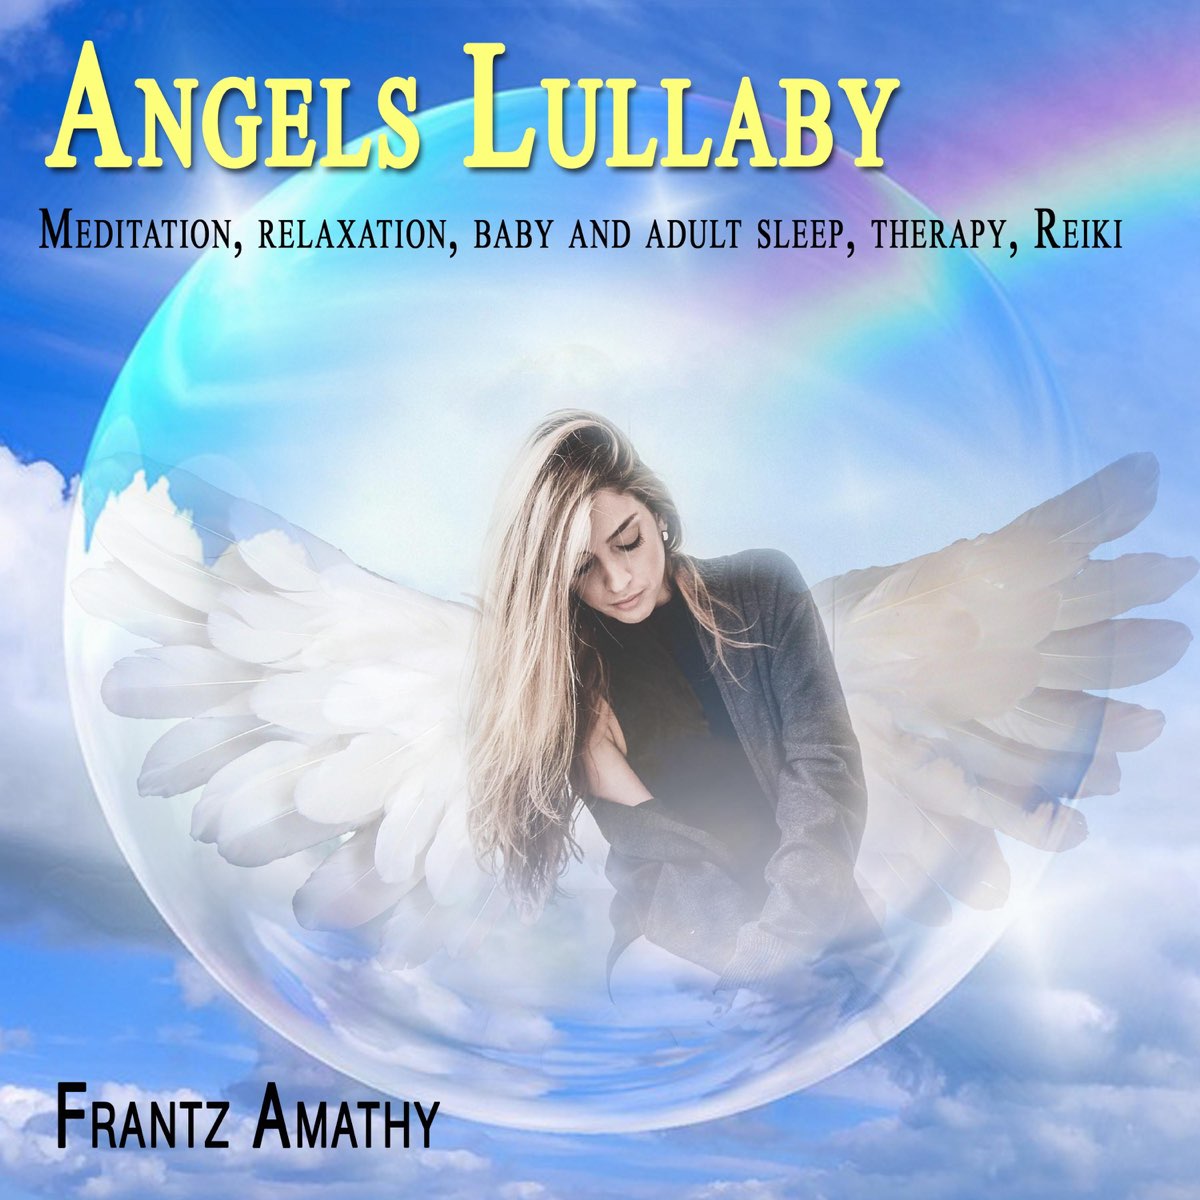 Angels Lullaby Хелена. Колыбельная с ангелом. Arash Helena Lullaby. Песня Angel. Колыбельная для ангела